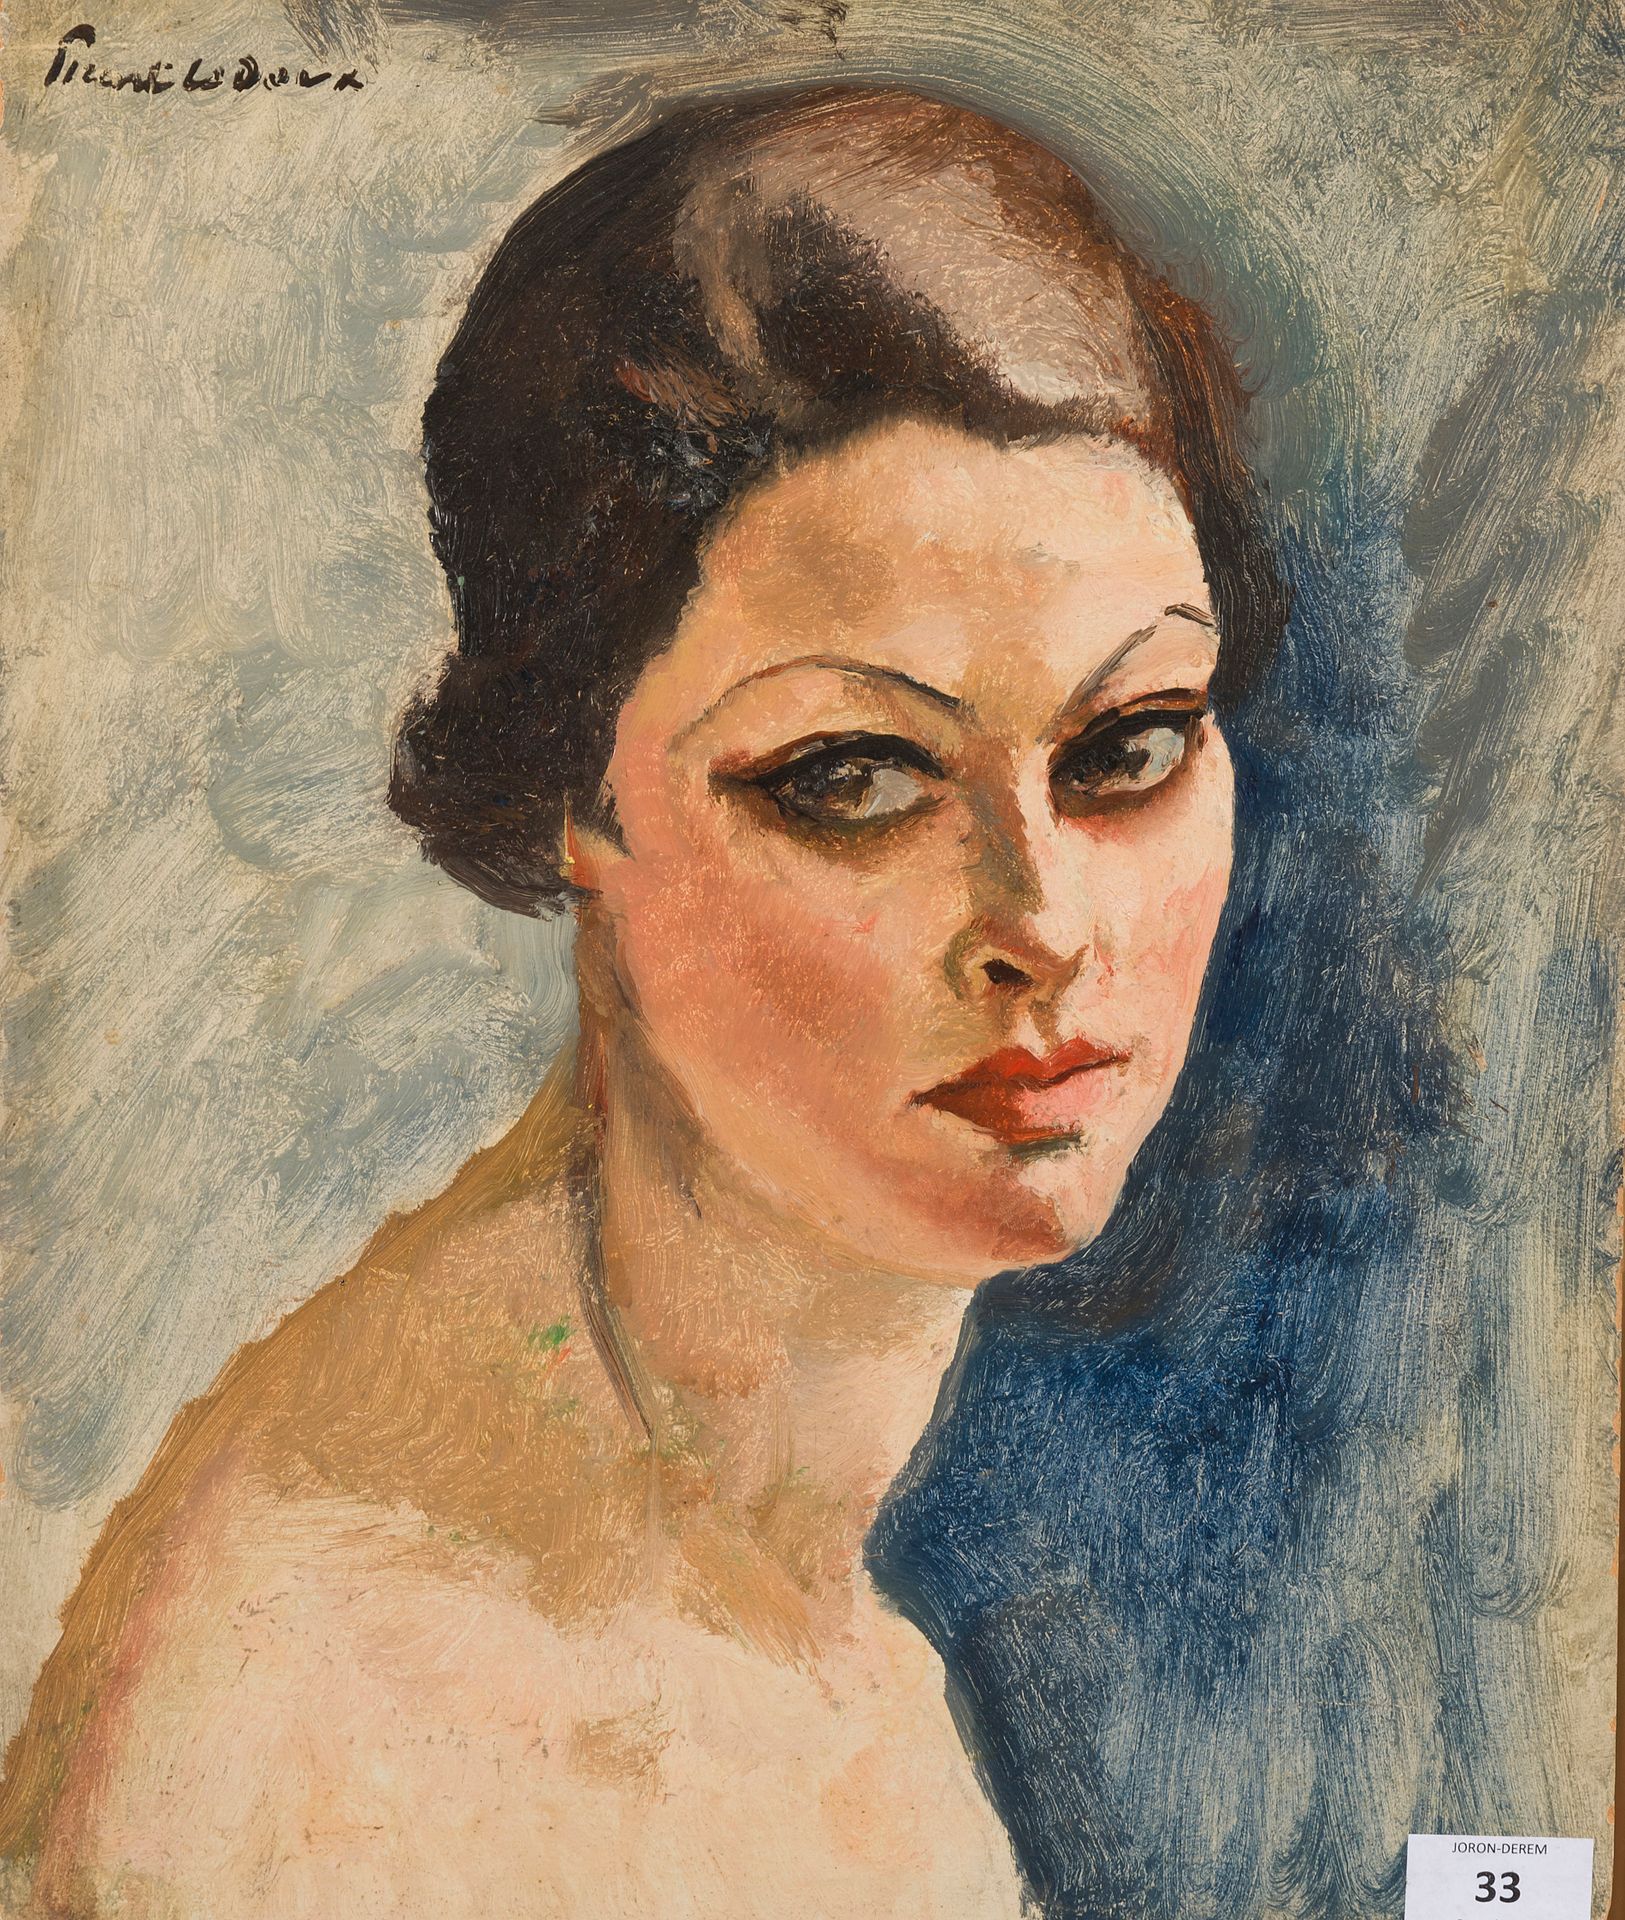 Null 查尔斯-皮卡特-勒杜 (1881-1959)
尼娜，1946年
木板油画，左上角有签名
41 x 33 cm